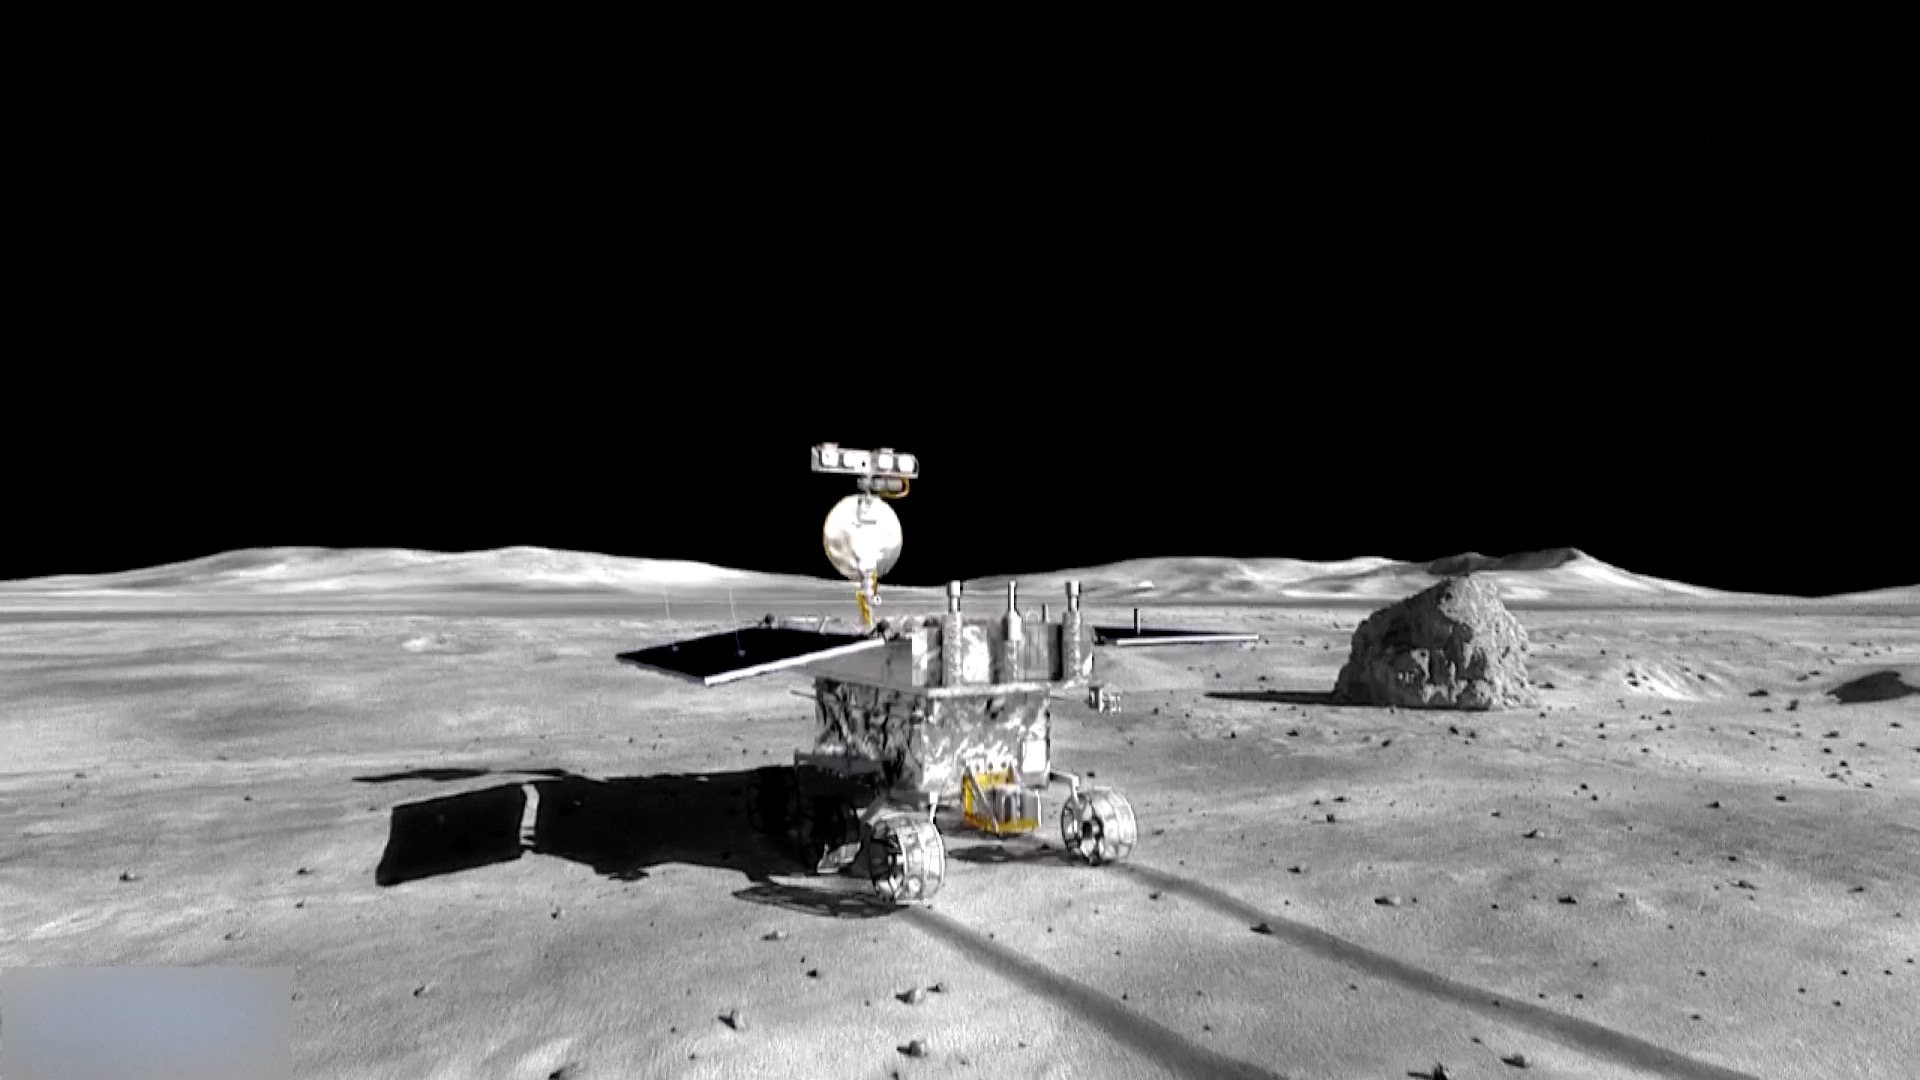 Космические аппараты на луне. Китайский Луноход Чанъэ 4. Луноход Юйту. Чанъэ-4 автоматическая межпланетная станция. Китайский Луноход Юйту.